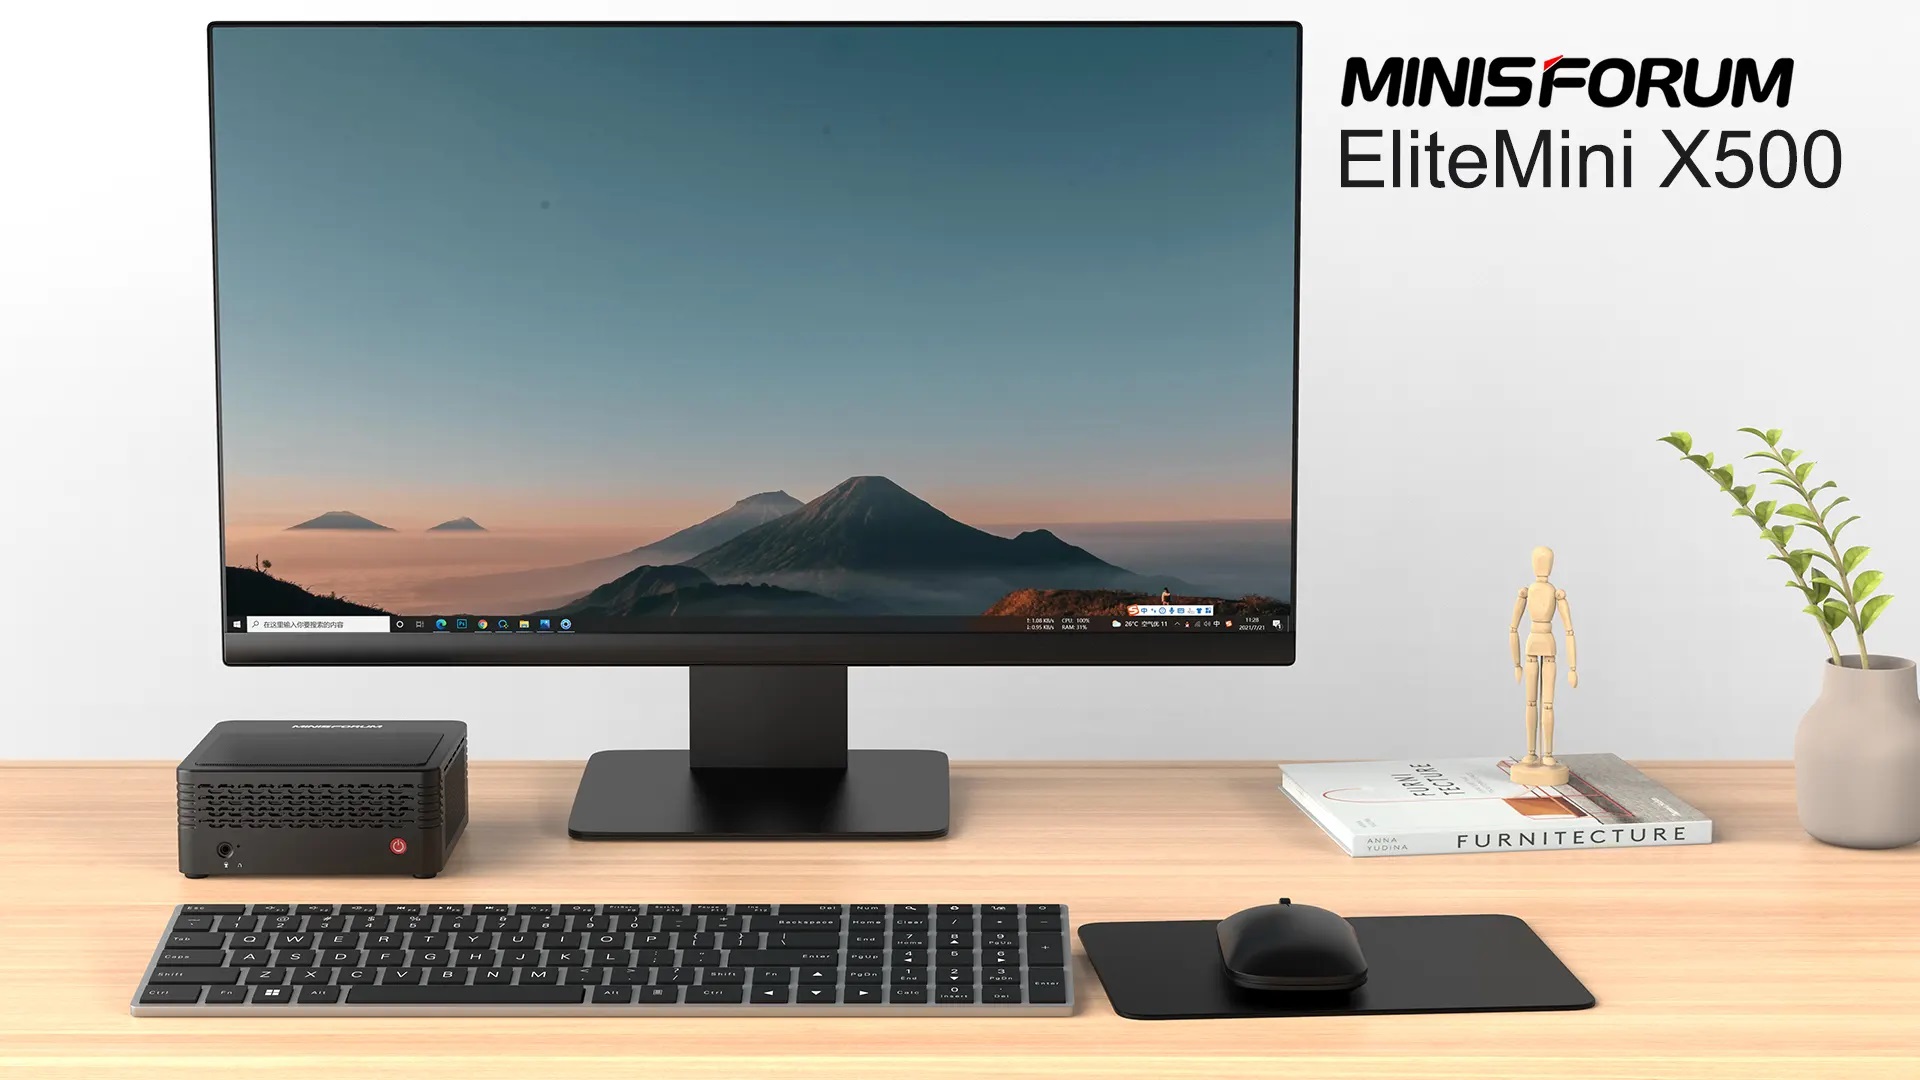 MINISFORUM Elitemini X500 Mini PC AMD Ryzen 5 5600G up to 4.4Ghz